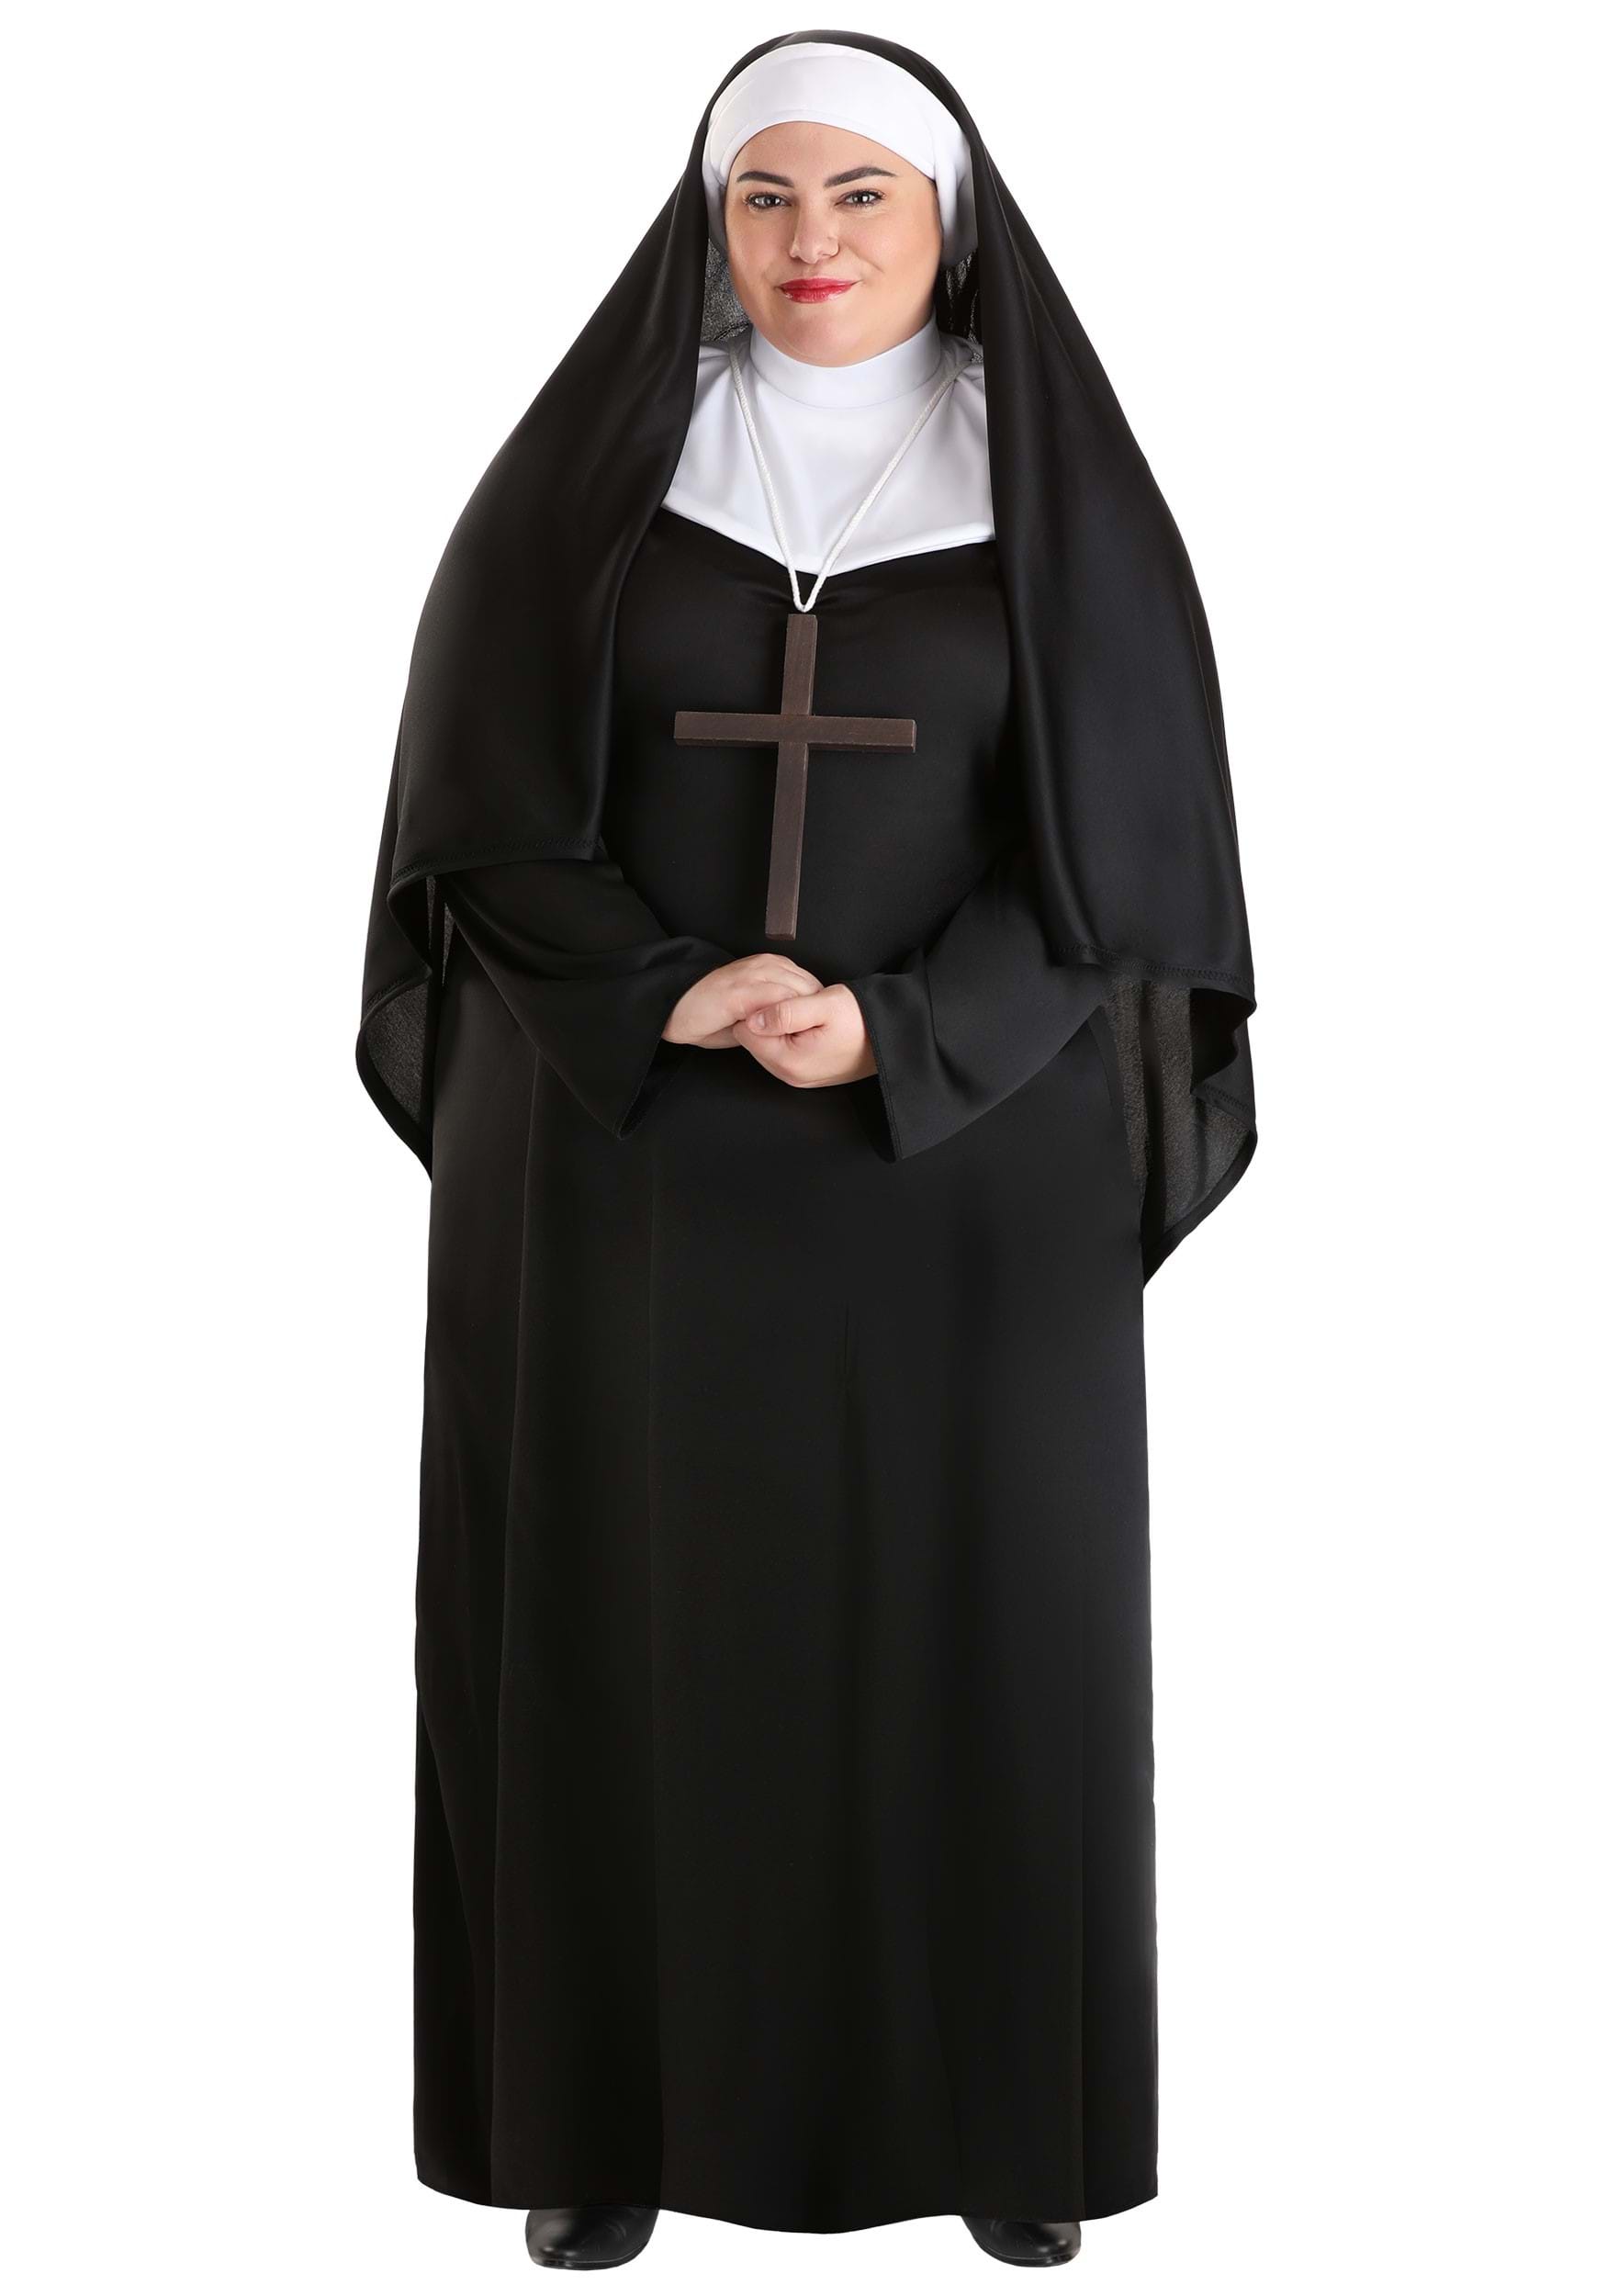 Nun mieux Femme Adulte Religieux Costume Halloween